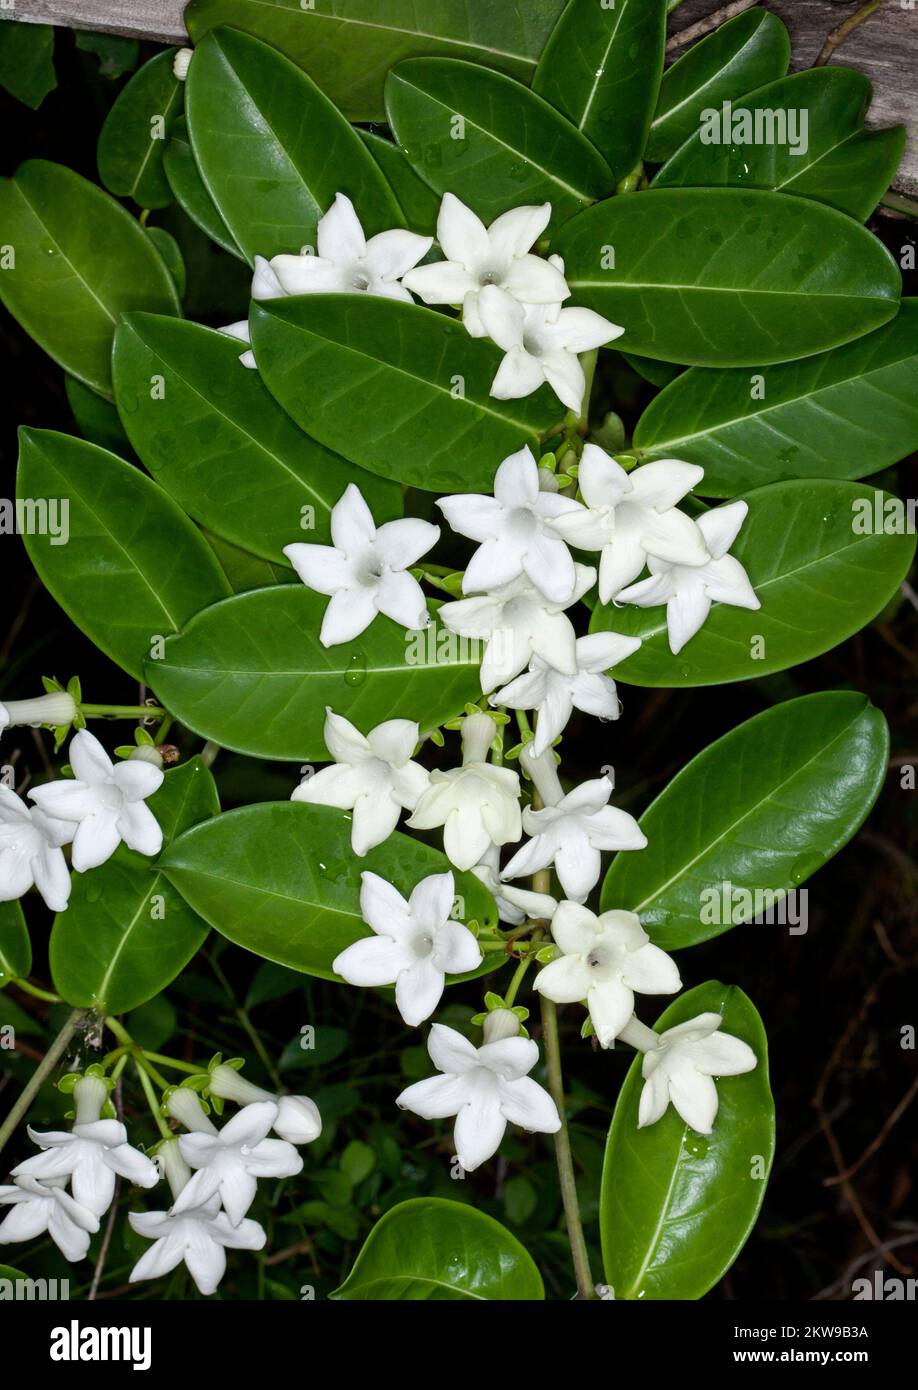 Cluster of white perfumed flowers of Stephanotis floribunda, Madagascar Jasmine, on background of green waxy leaves, in an Australian garden Stock Photo